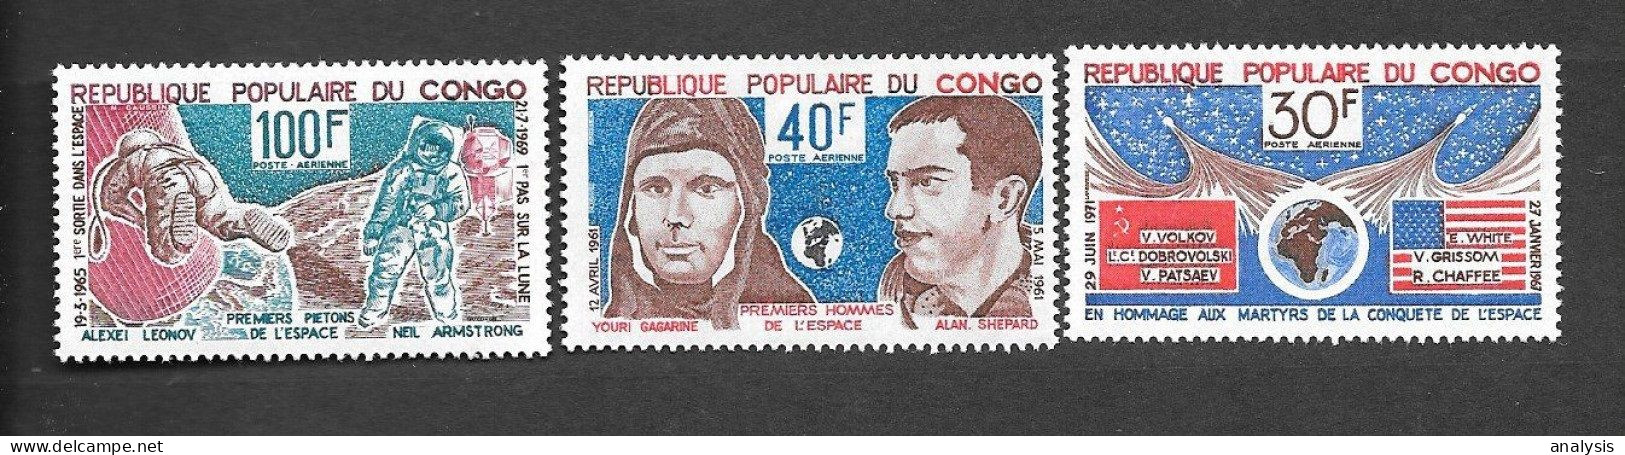 Congo Brazzaville Space 3 Stamps 1973 MNH. Gagarin "Vostok 1" "Apollo 11" "Soyuz 11" "Apollo 1" Accident - Afrique